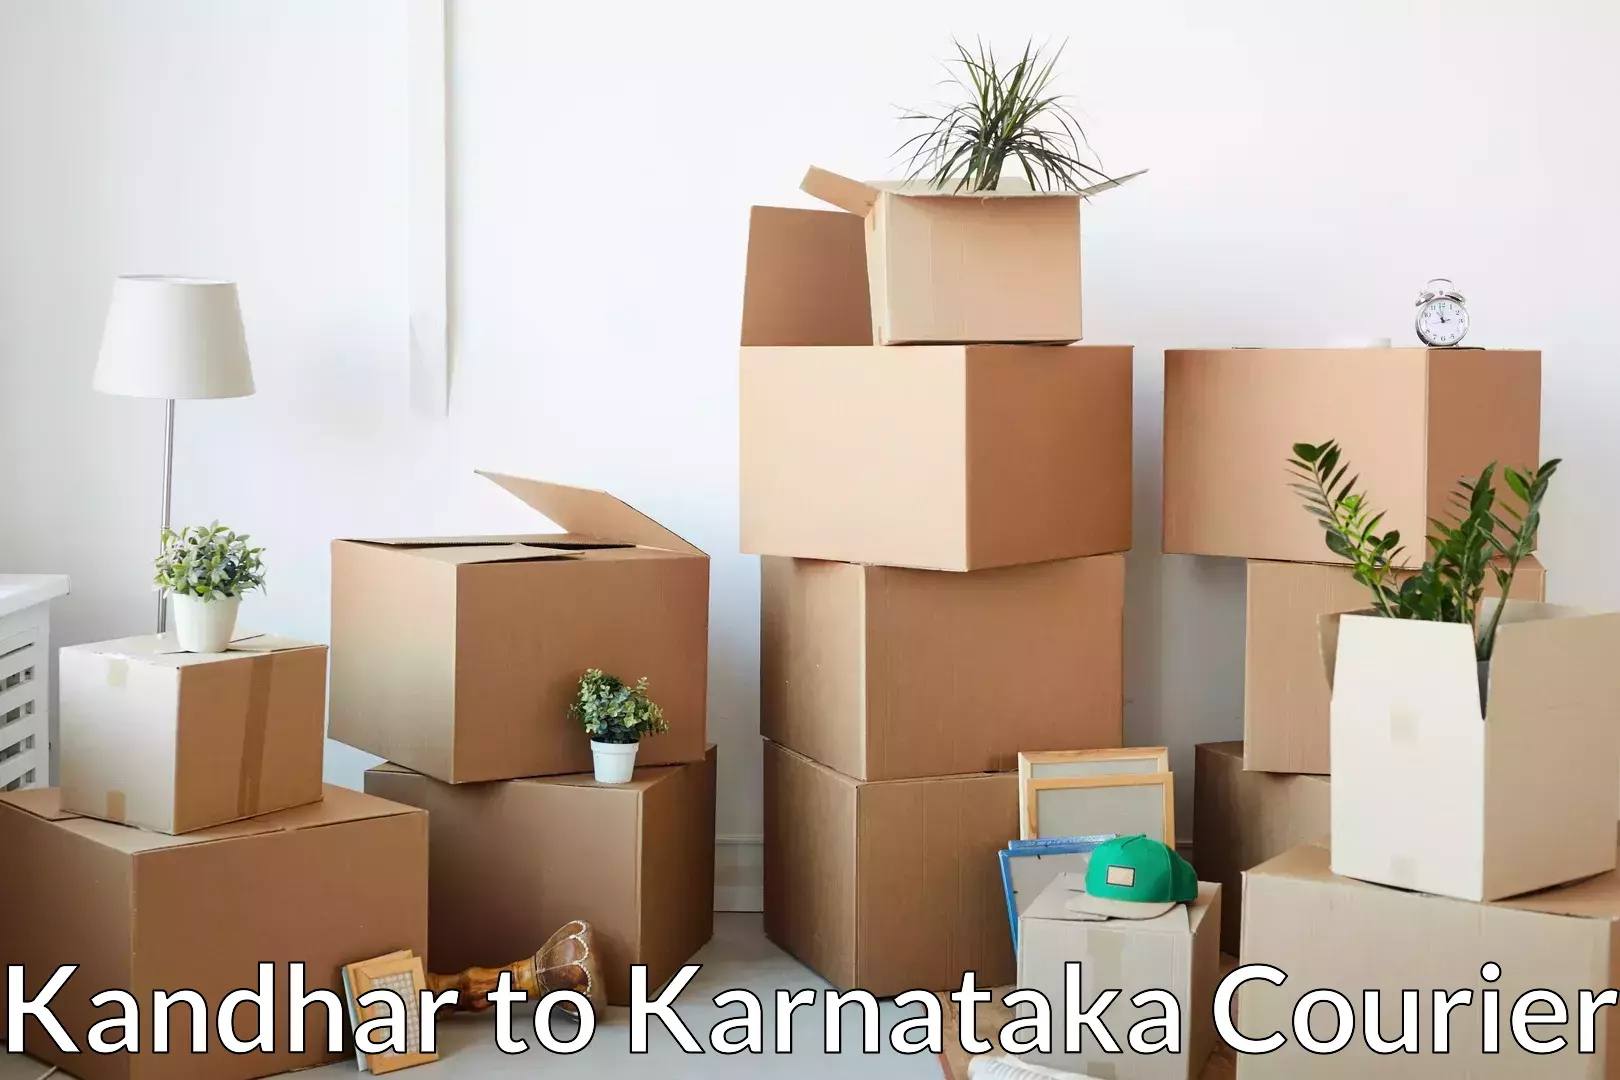 Professional moving company Kandhar to Karnataka